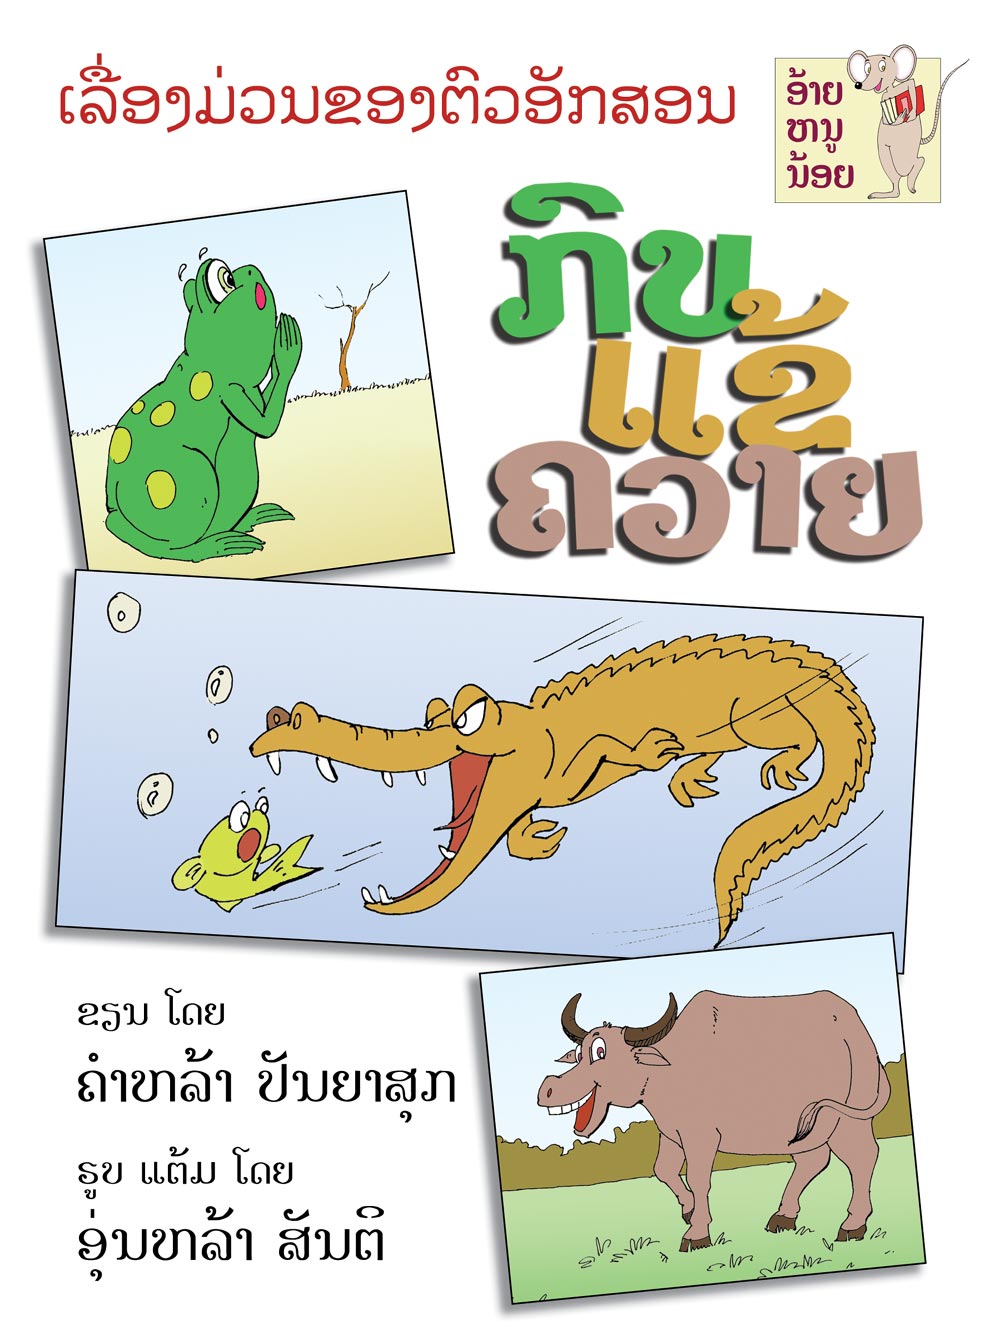 Frog, Alligator, Buffalo large book cover, published in Lao language